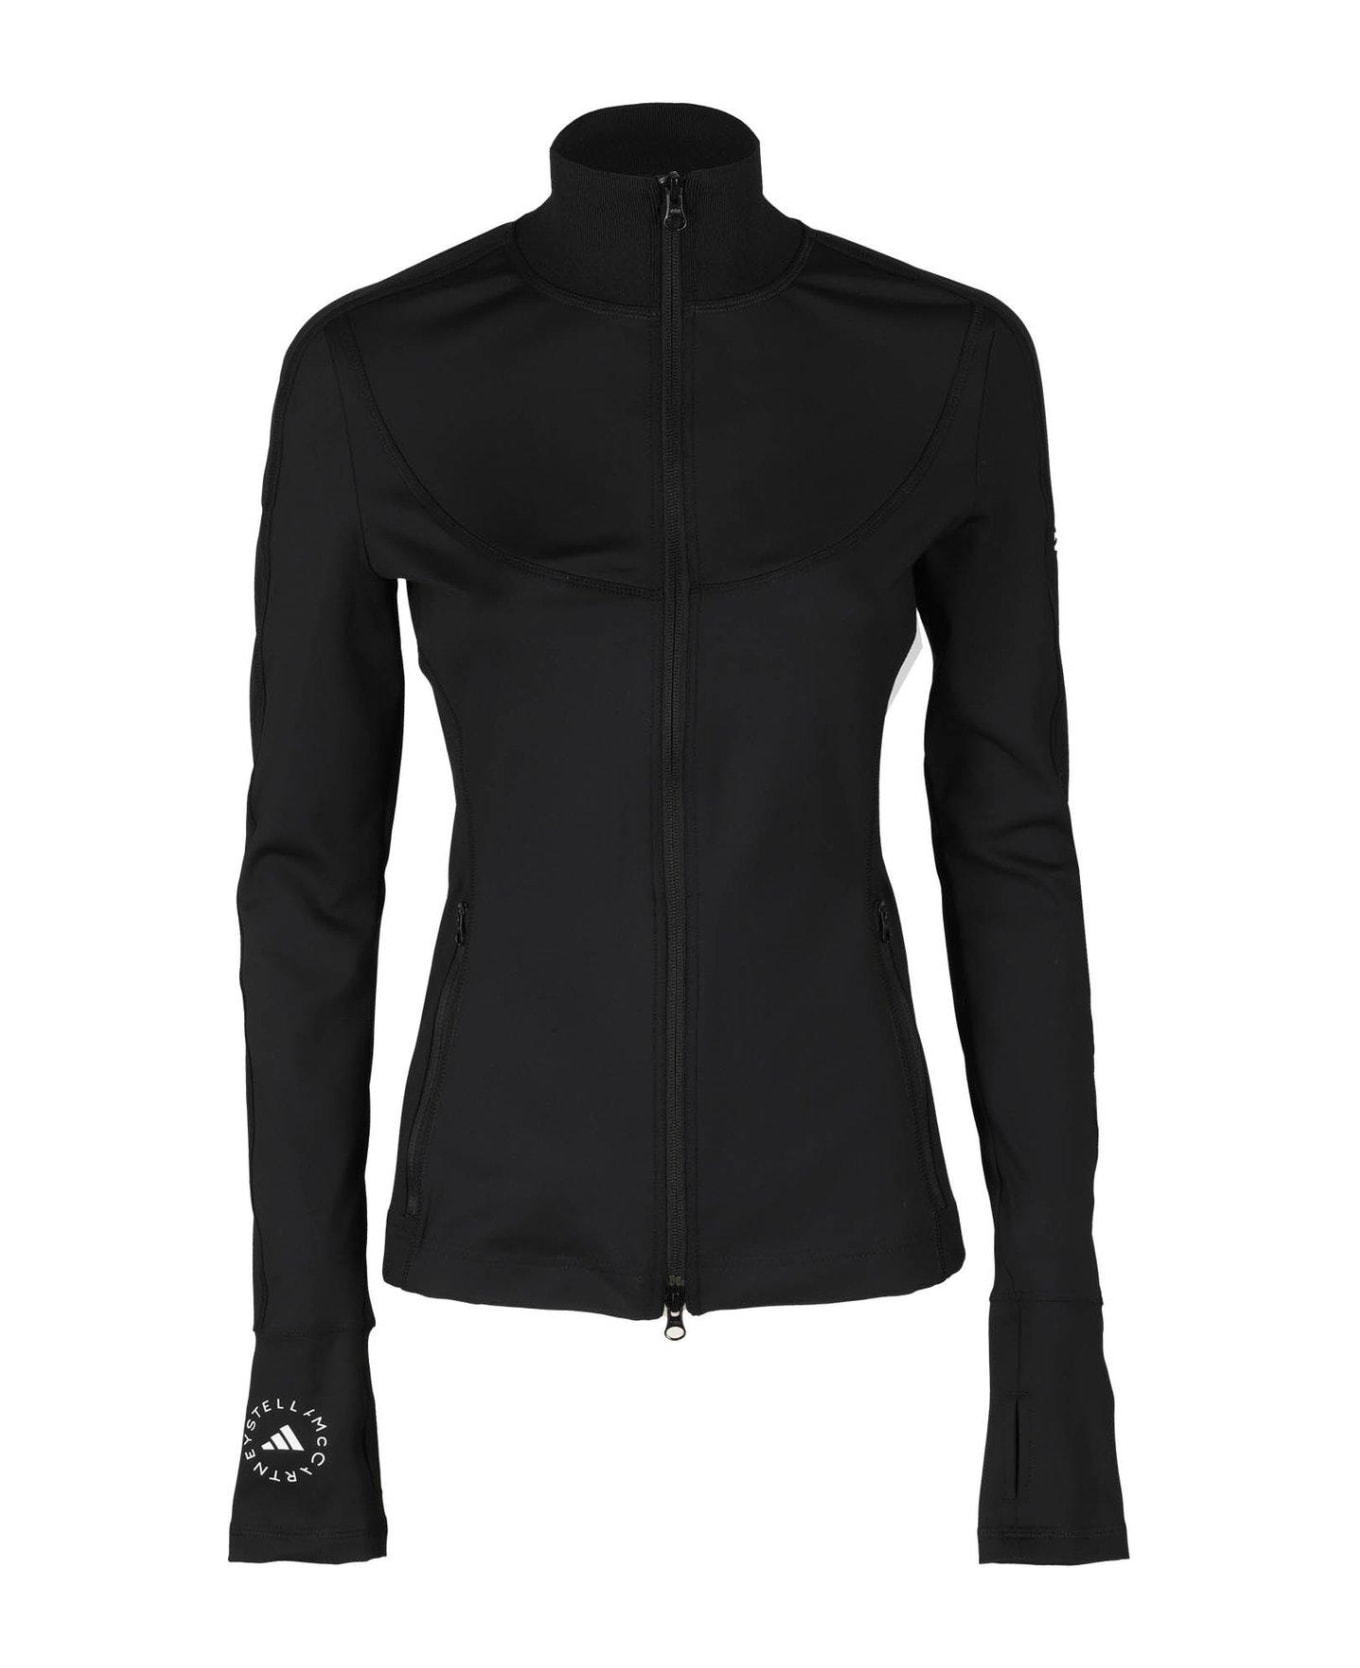 Adidas by Stella McCartney Truepurpose High-neck Training Jacket - Black